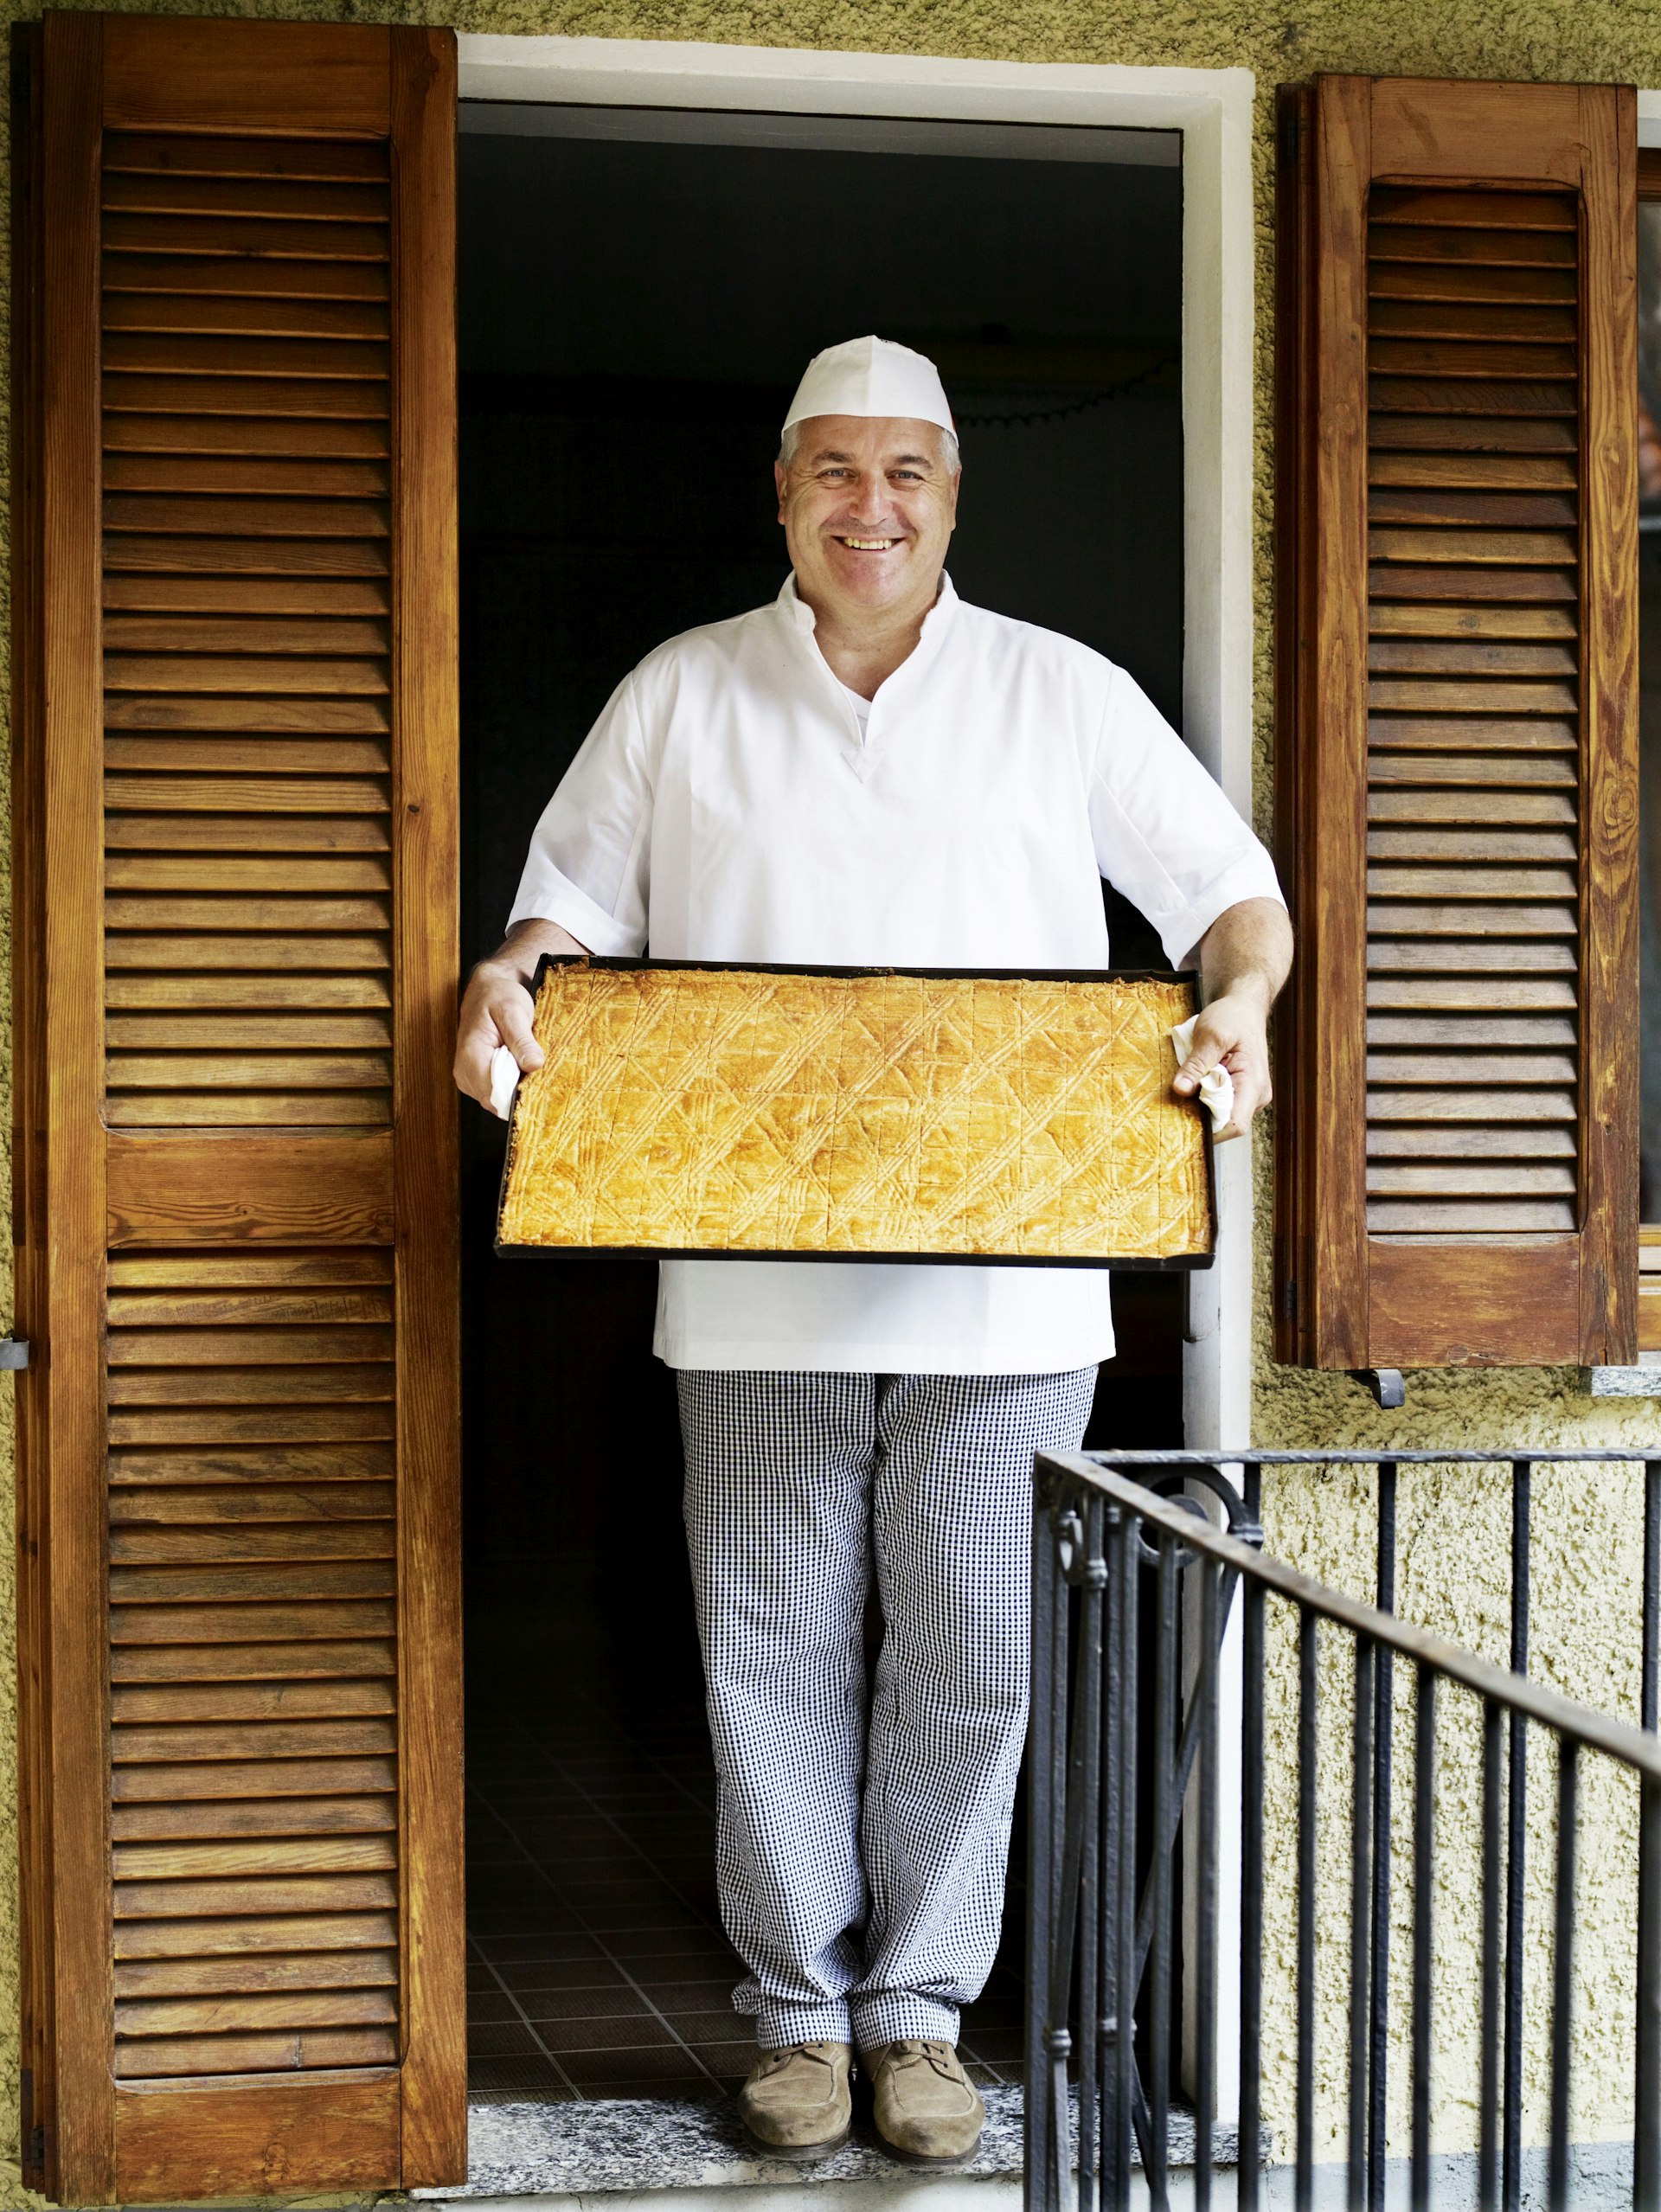 Baker holding a tray of fugascina biscuits at Al Vecchio Fornaio Pasticcere in Mergozzo.